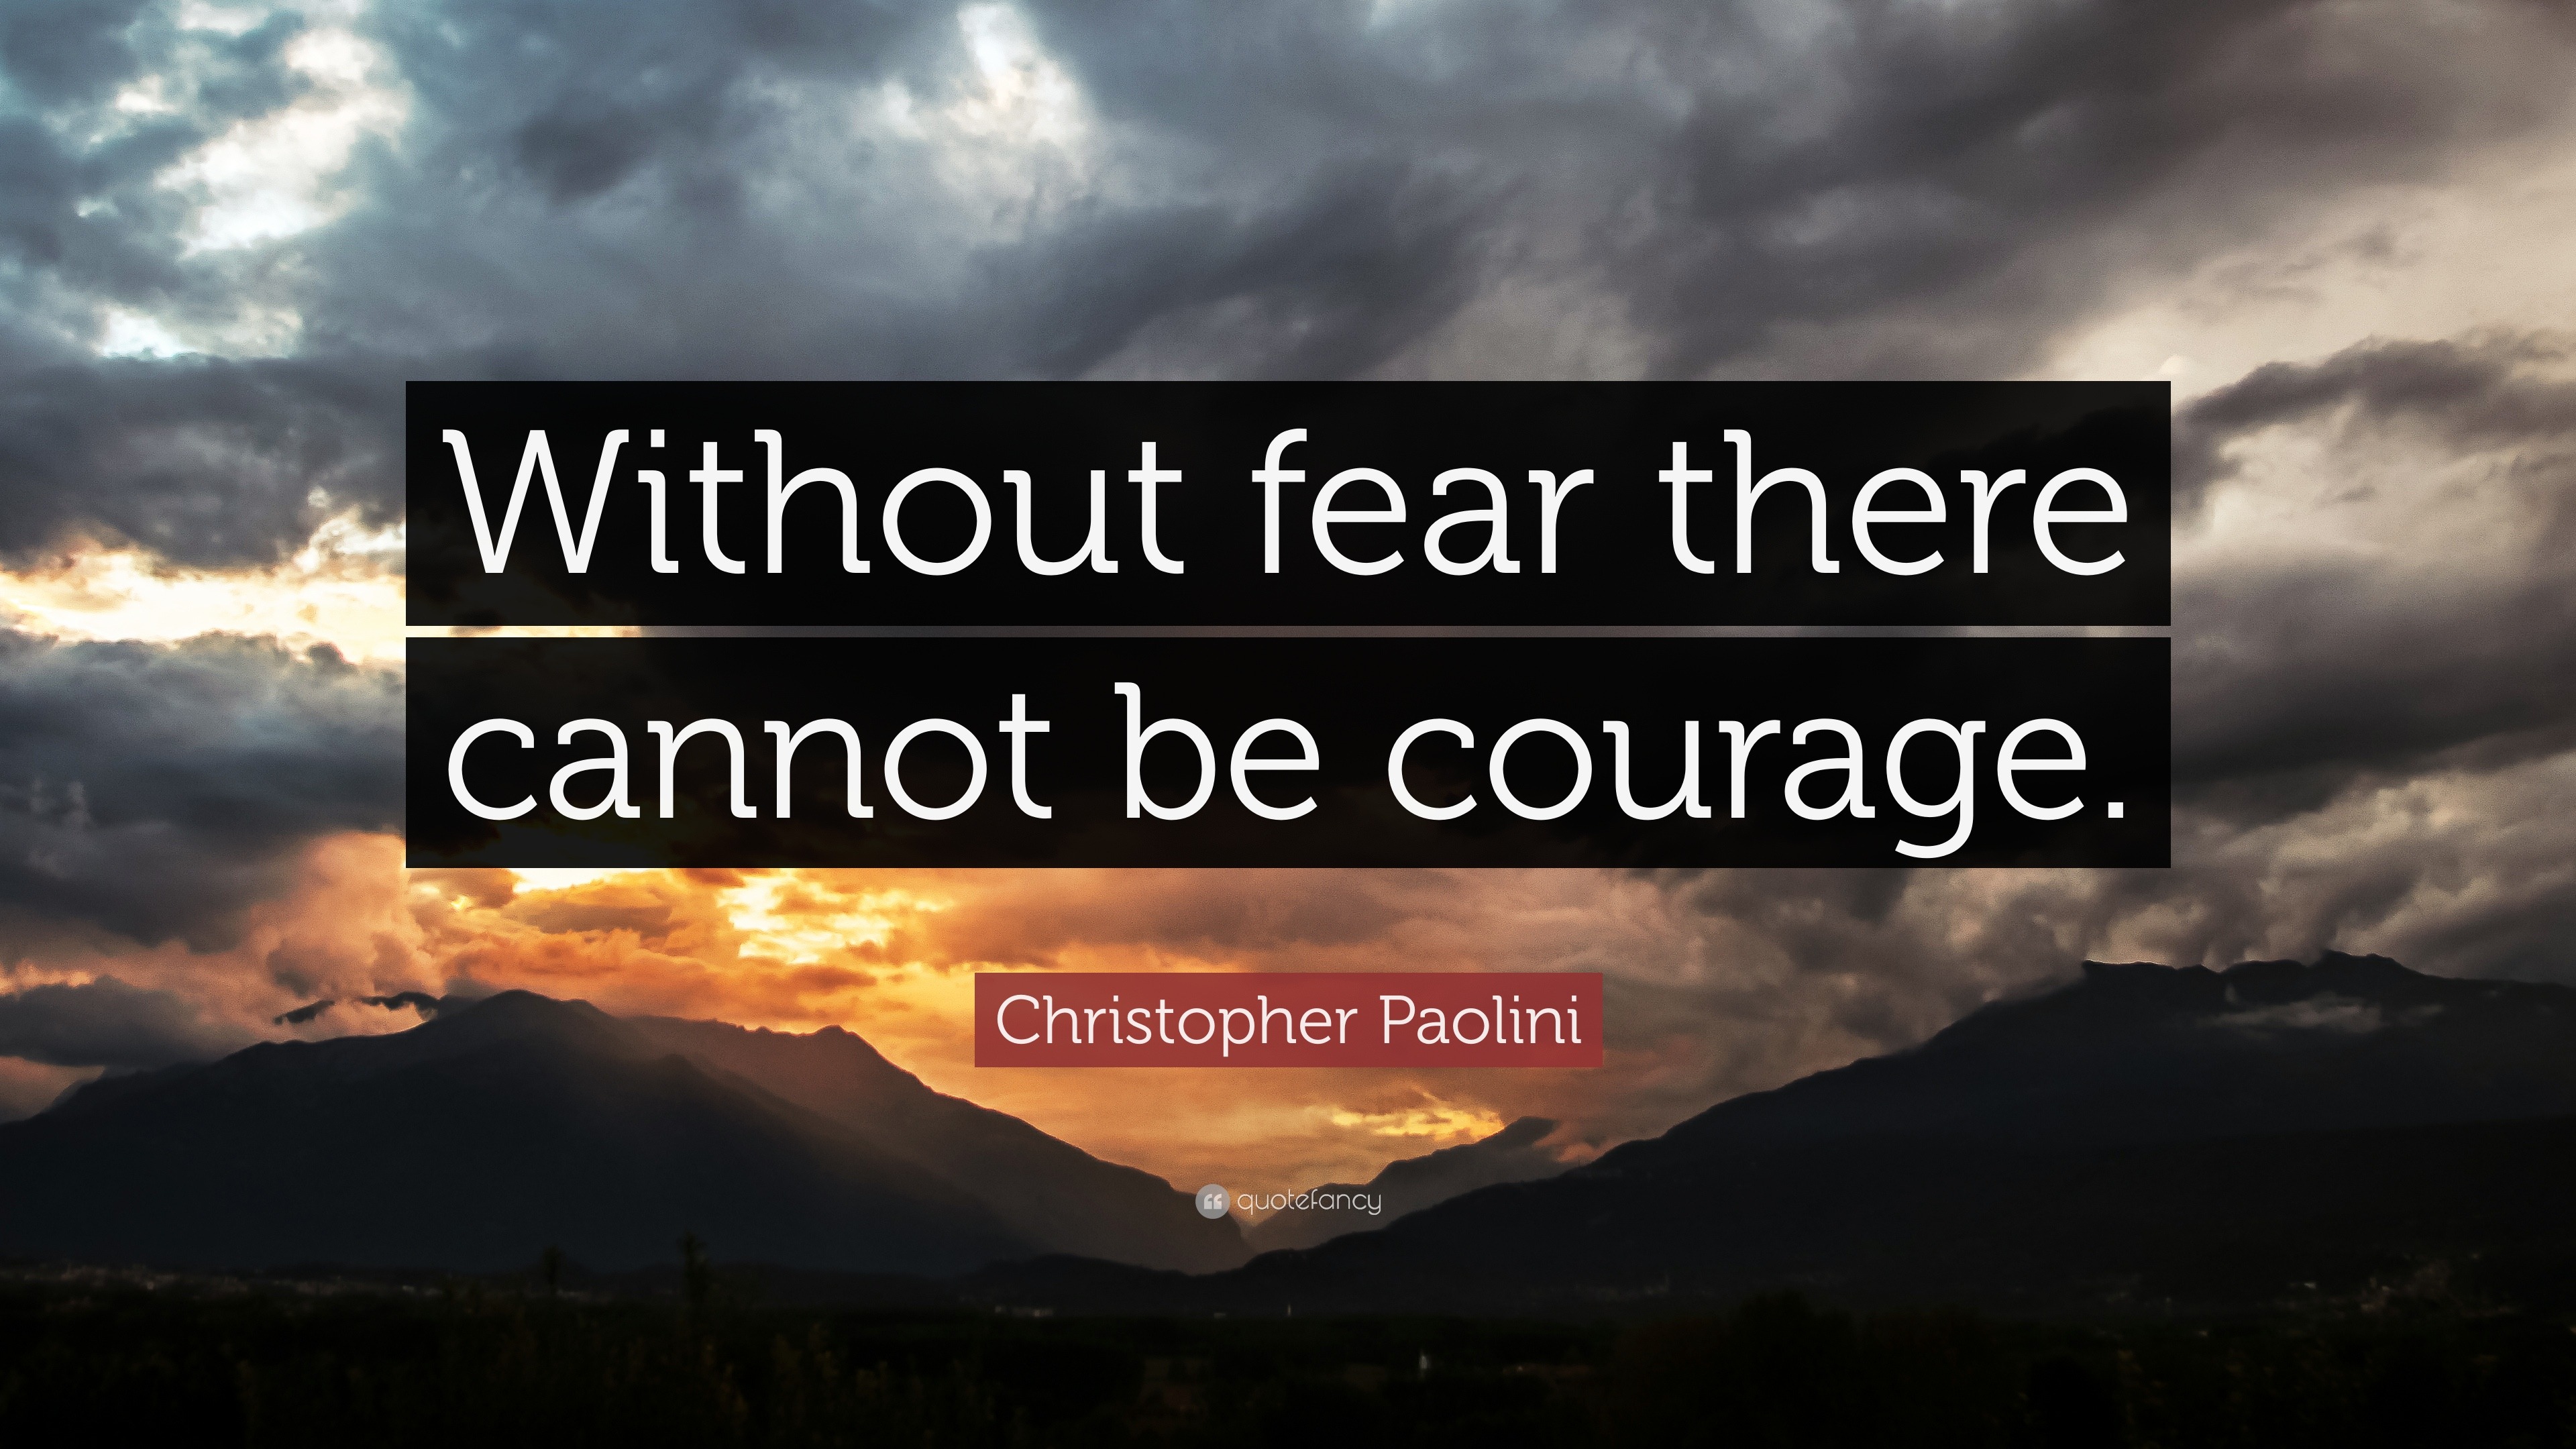 having courage quotes